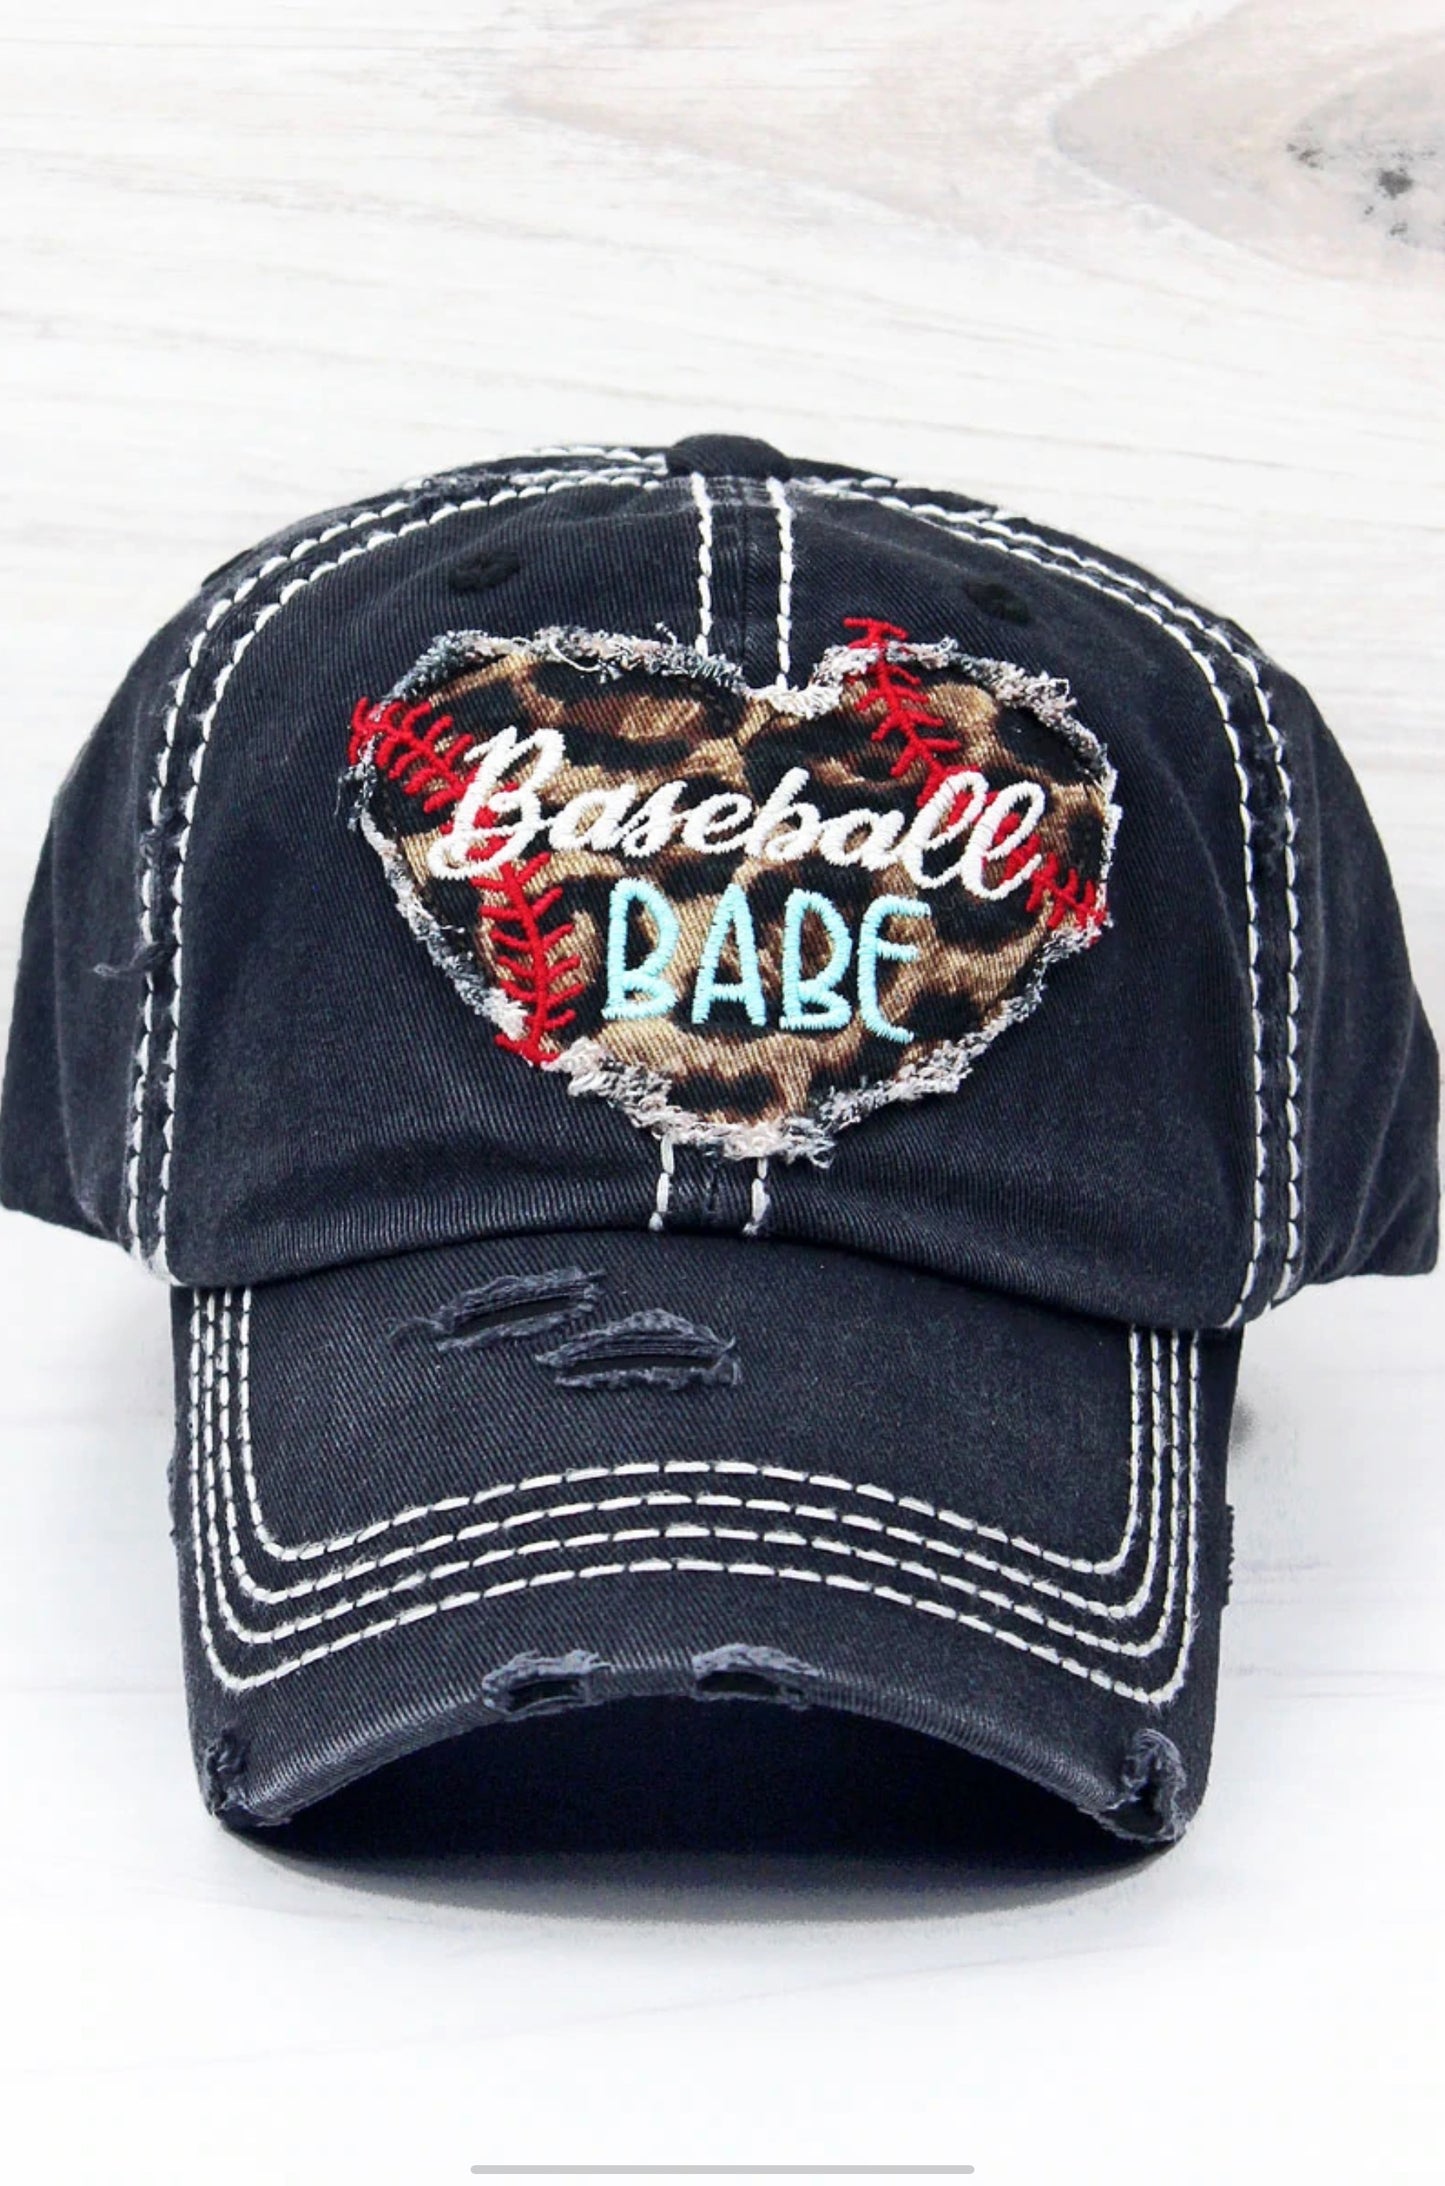 Baseball Babe Hat